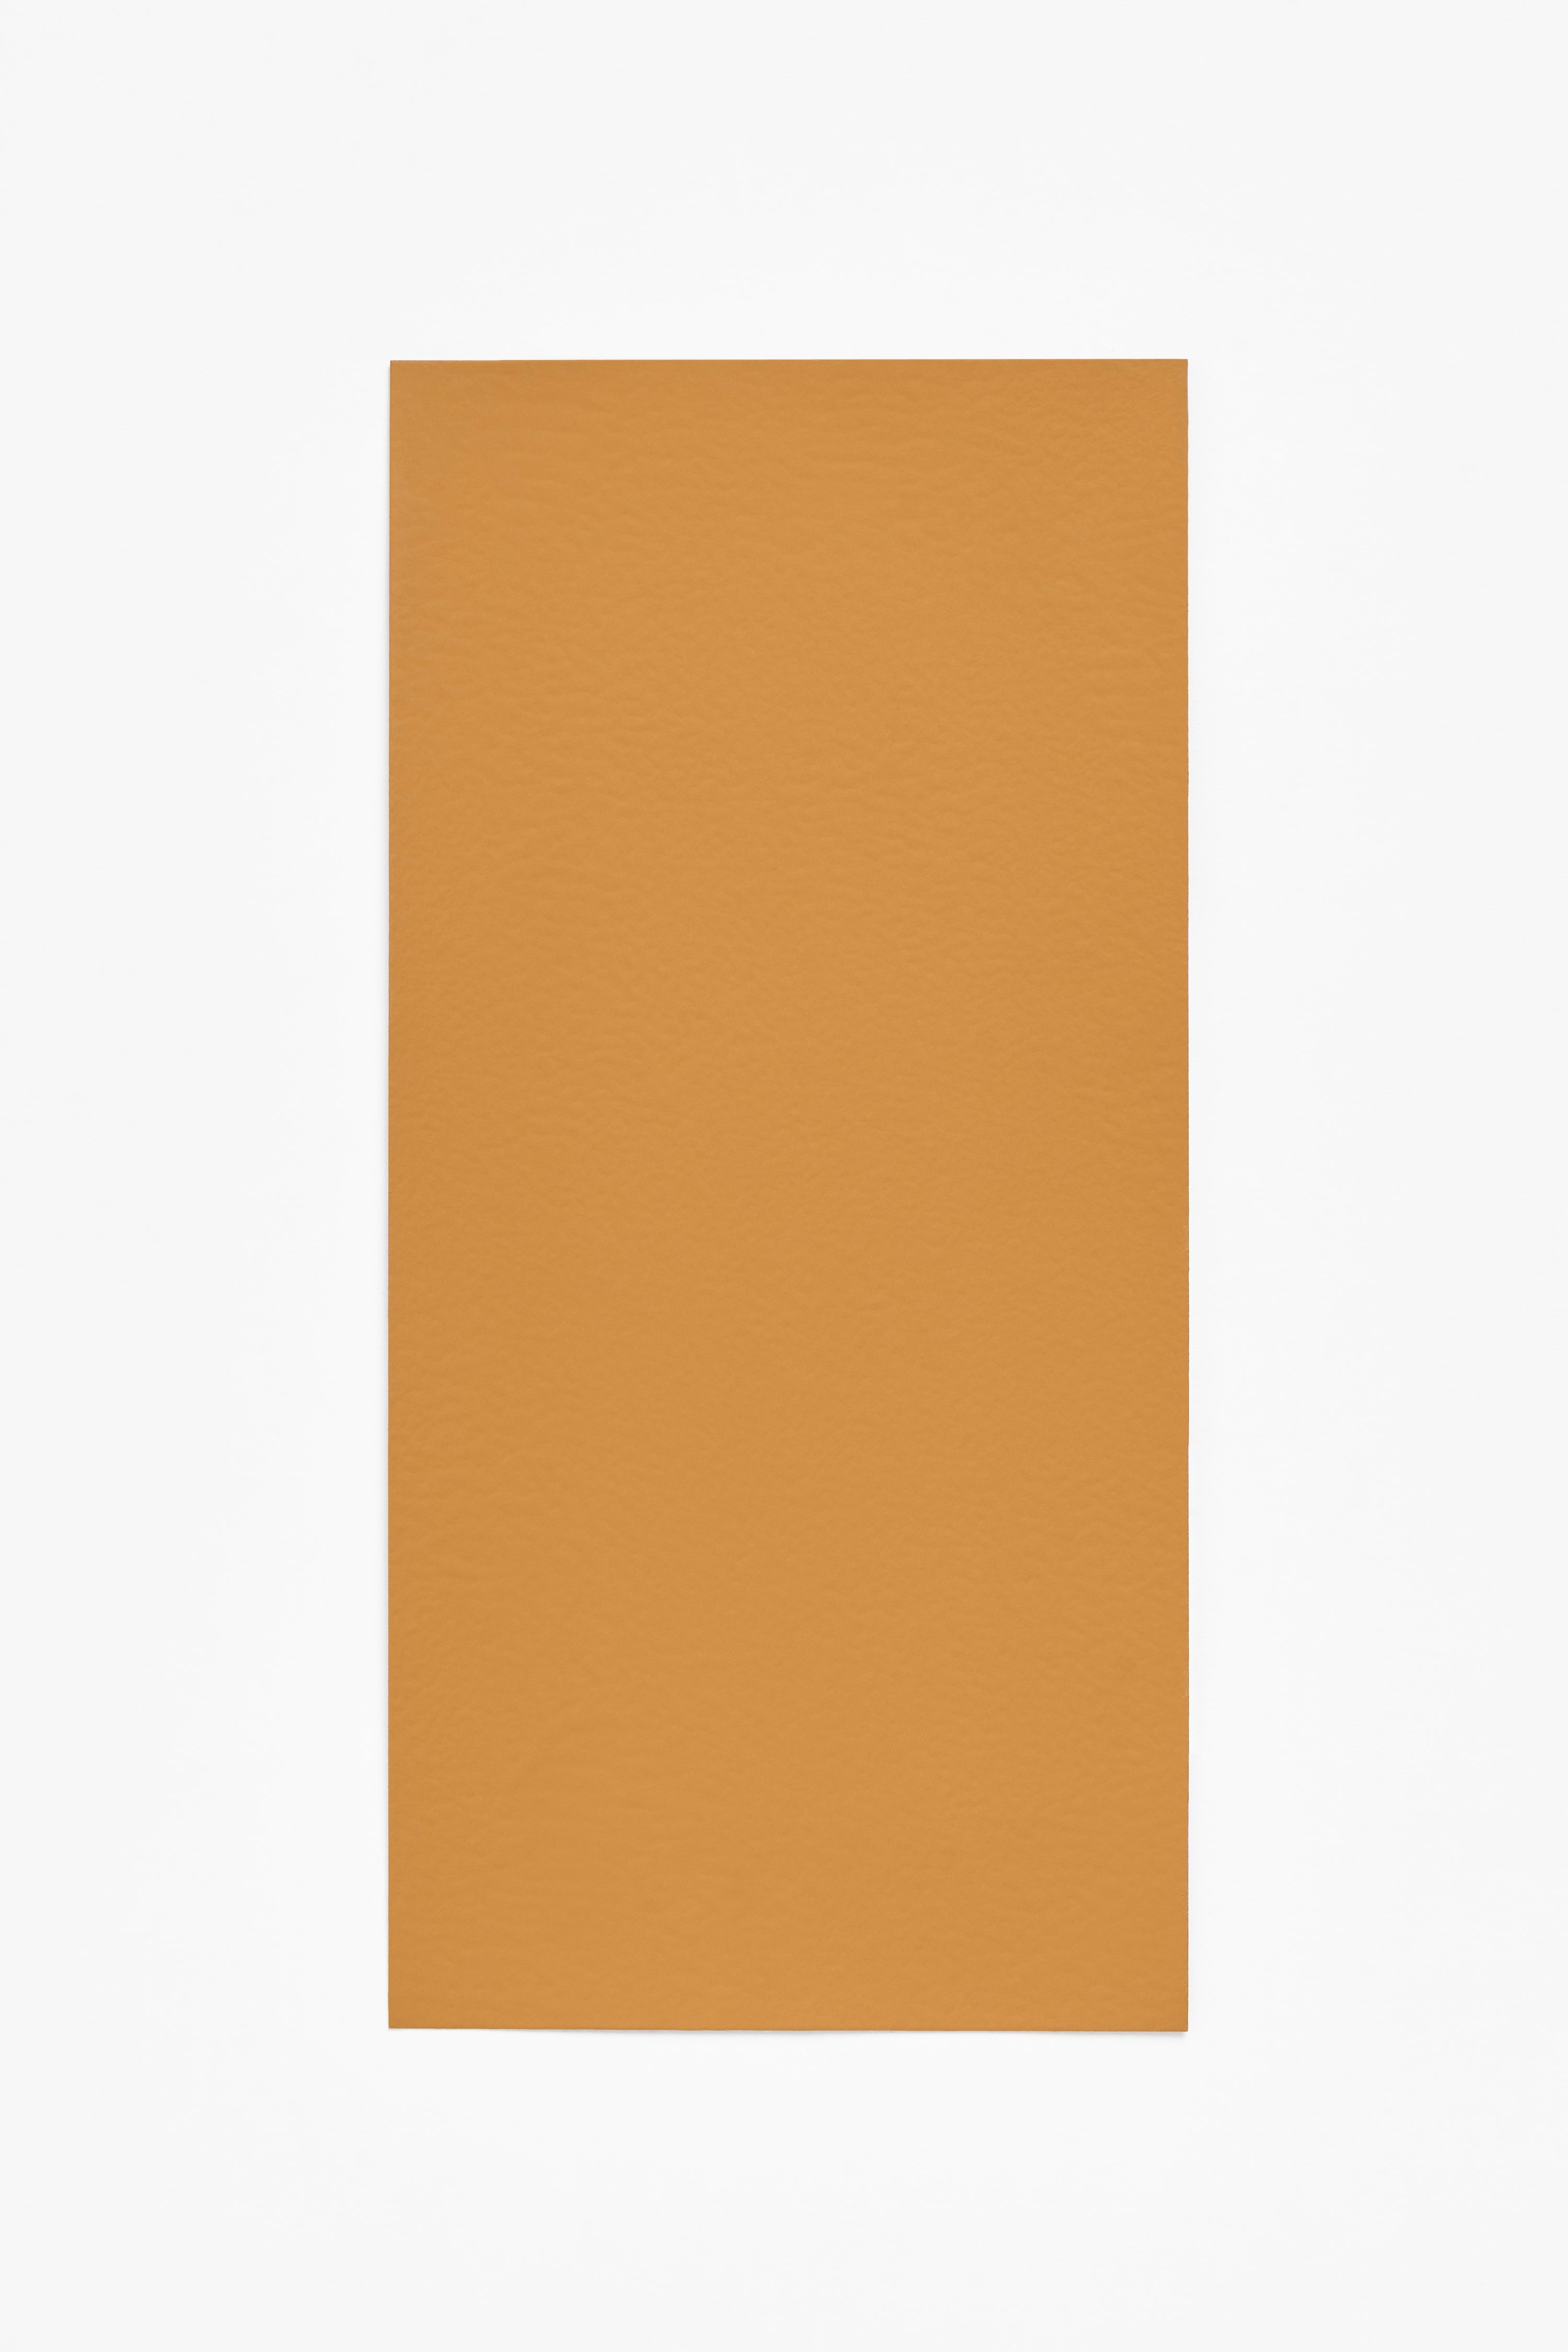 Curry — a paint colour developed by Muller Van Severen for Blēo